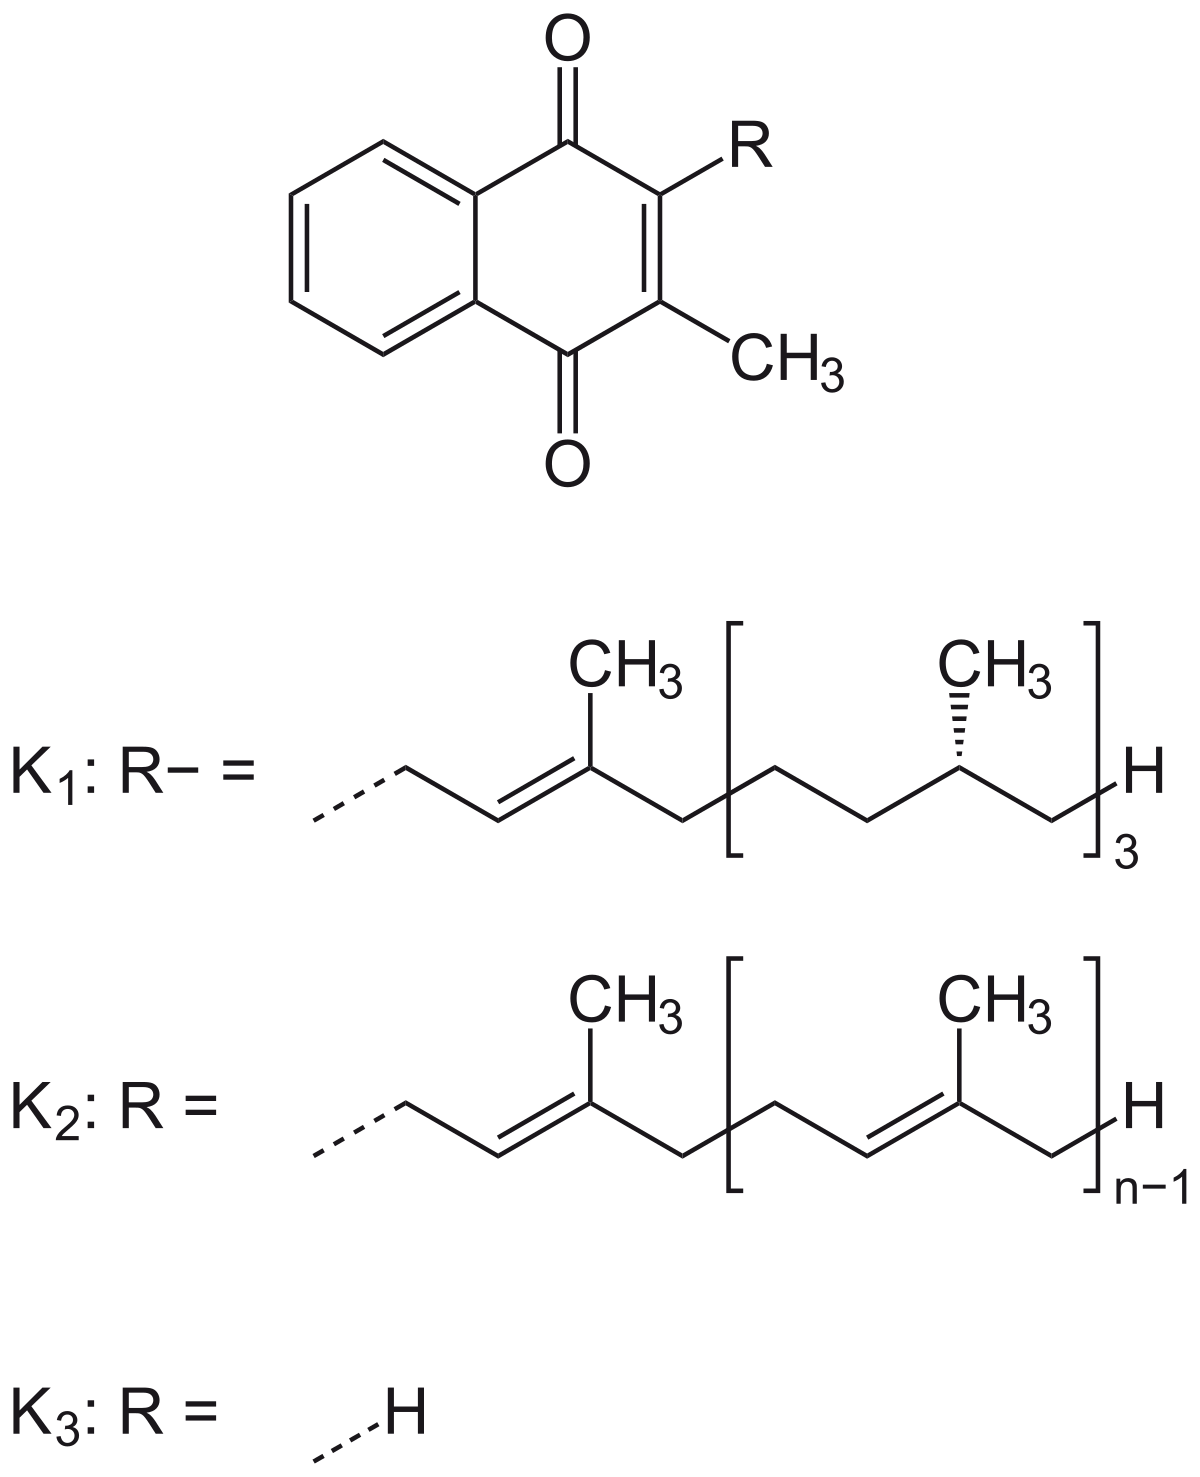 vitamin k structure